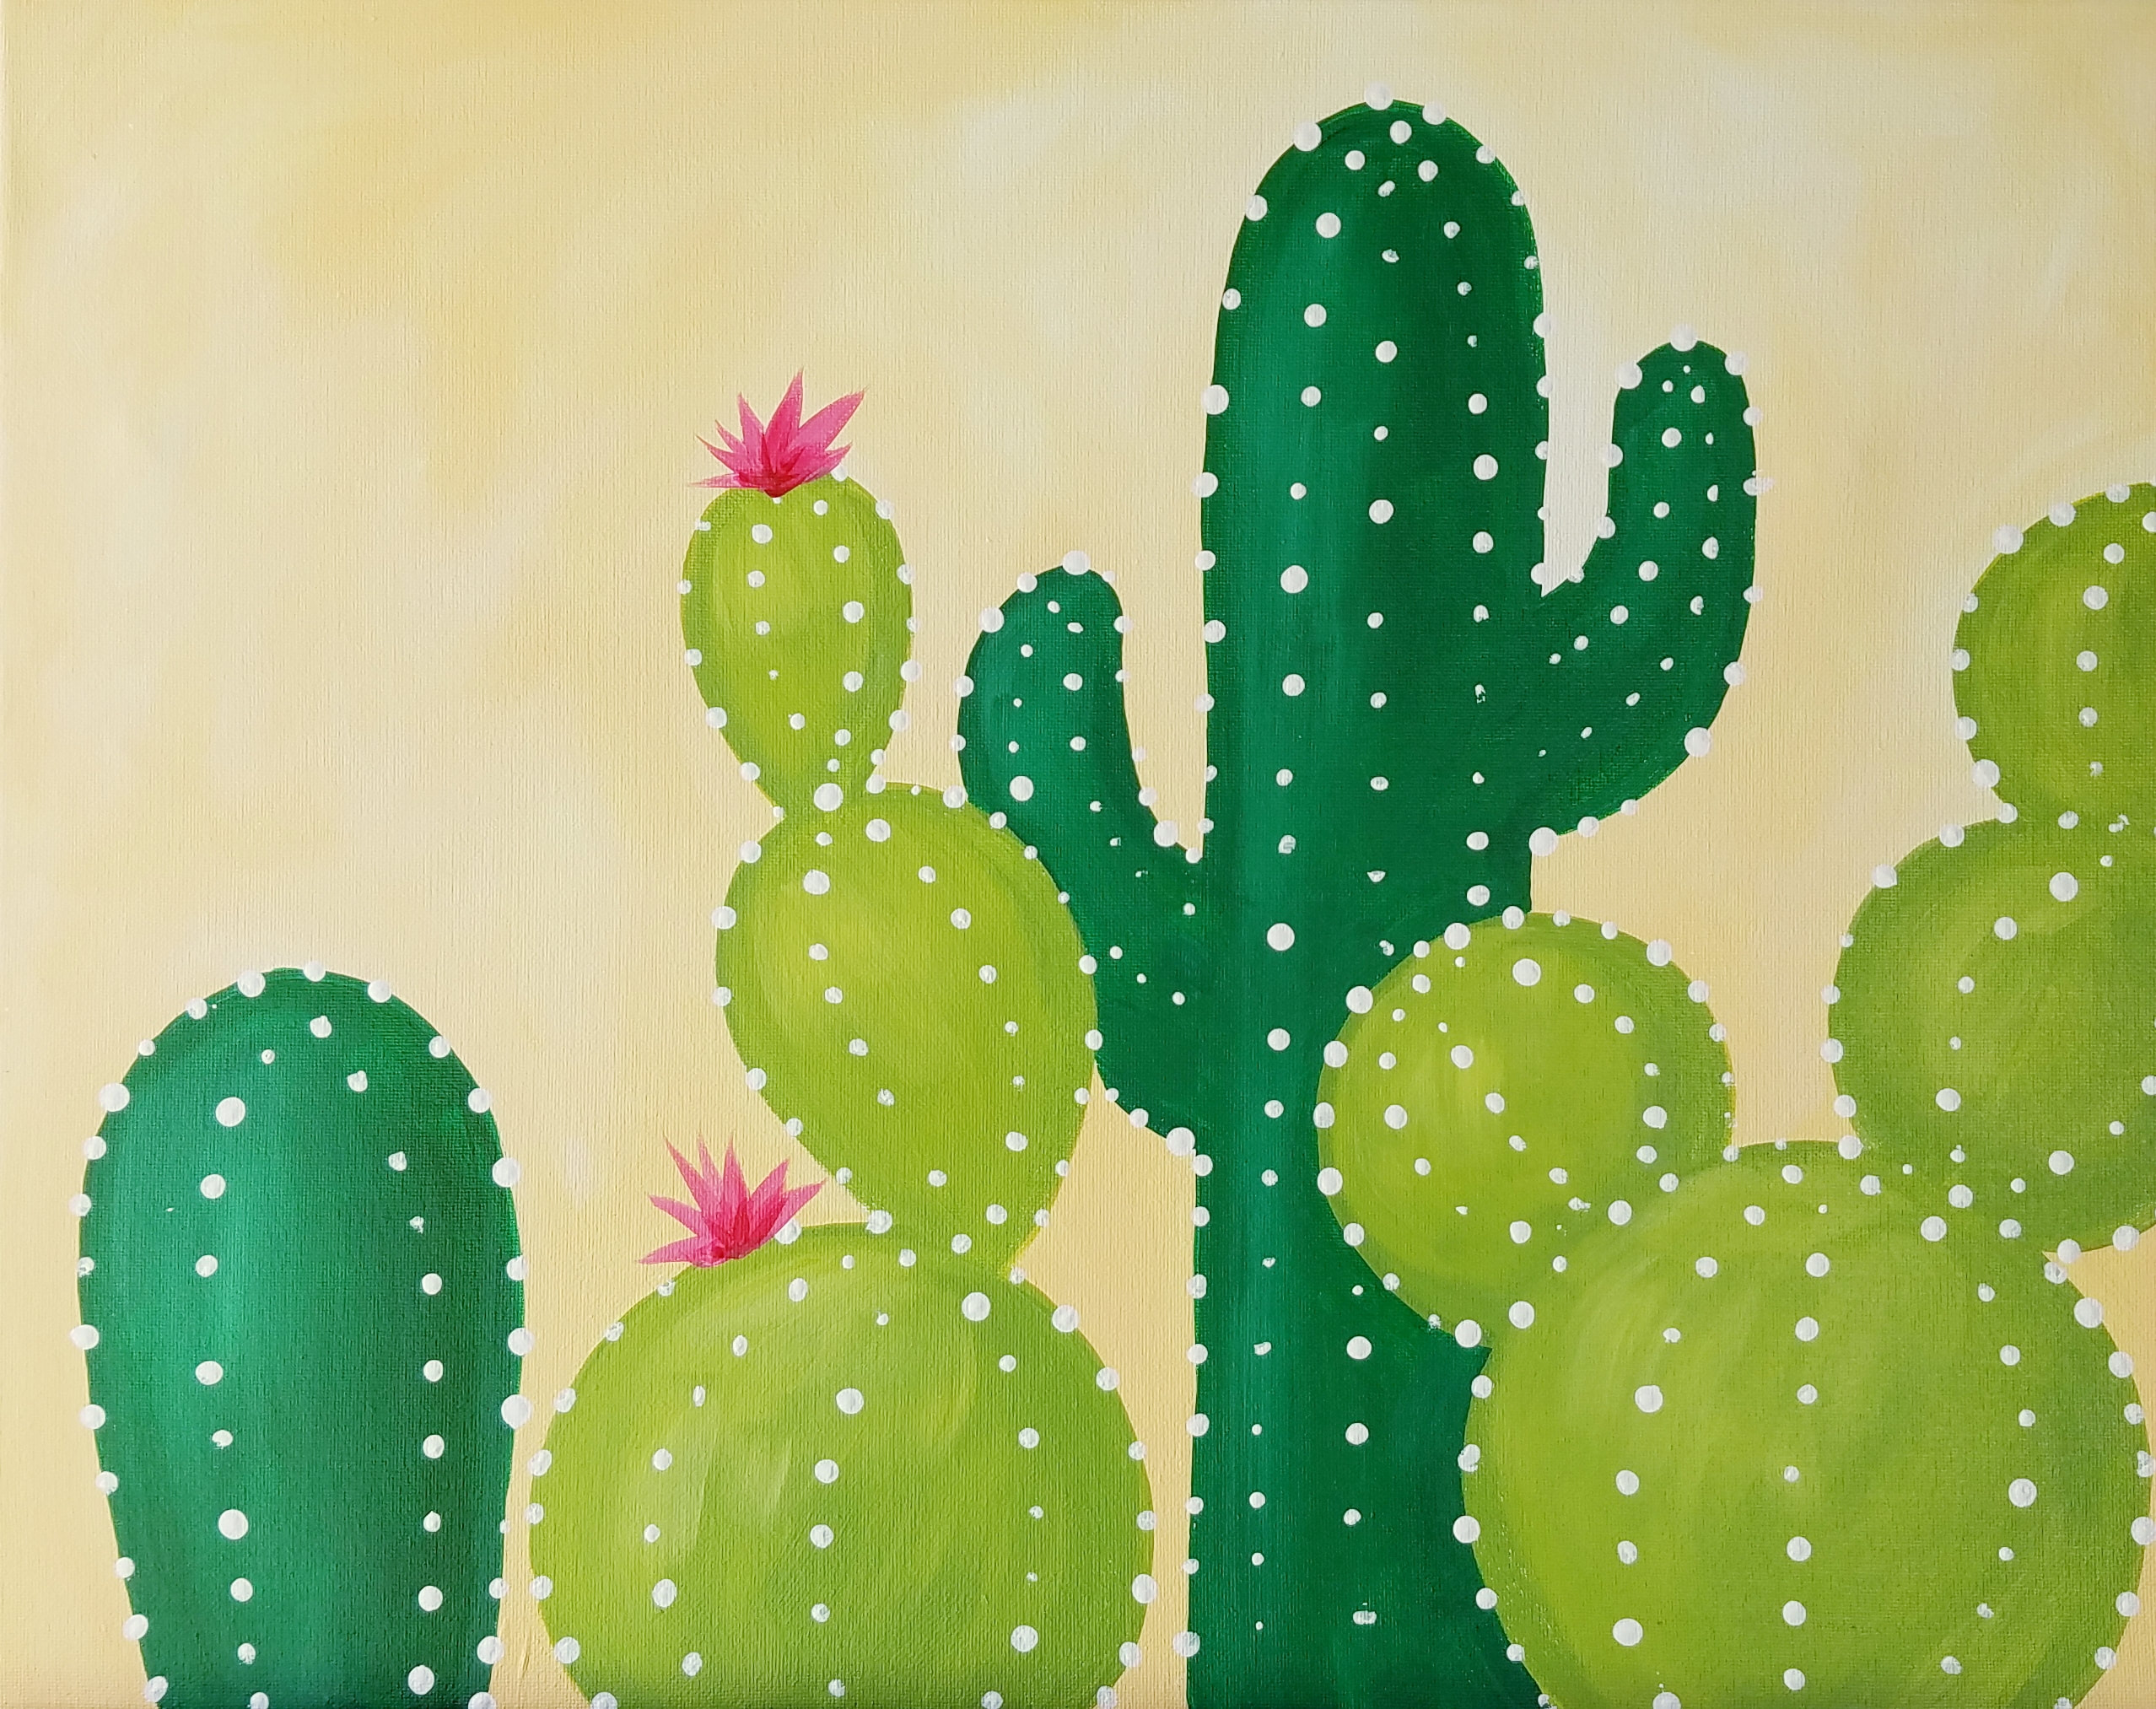 Cactus Smile in Boho Colors Summer Canvas Paint Art Kit